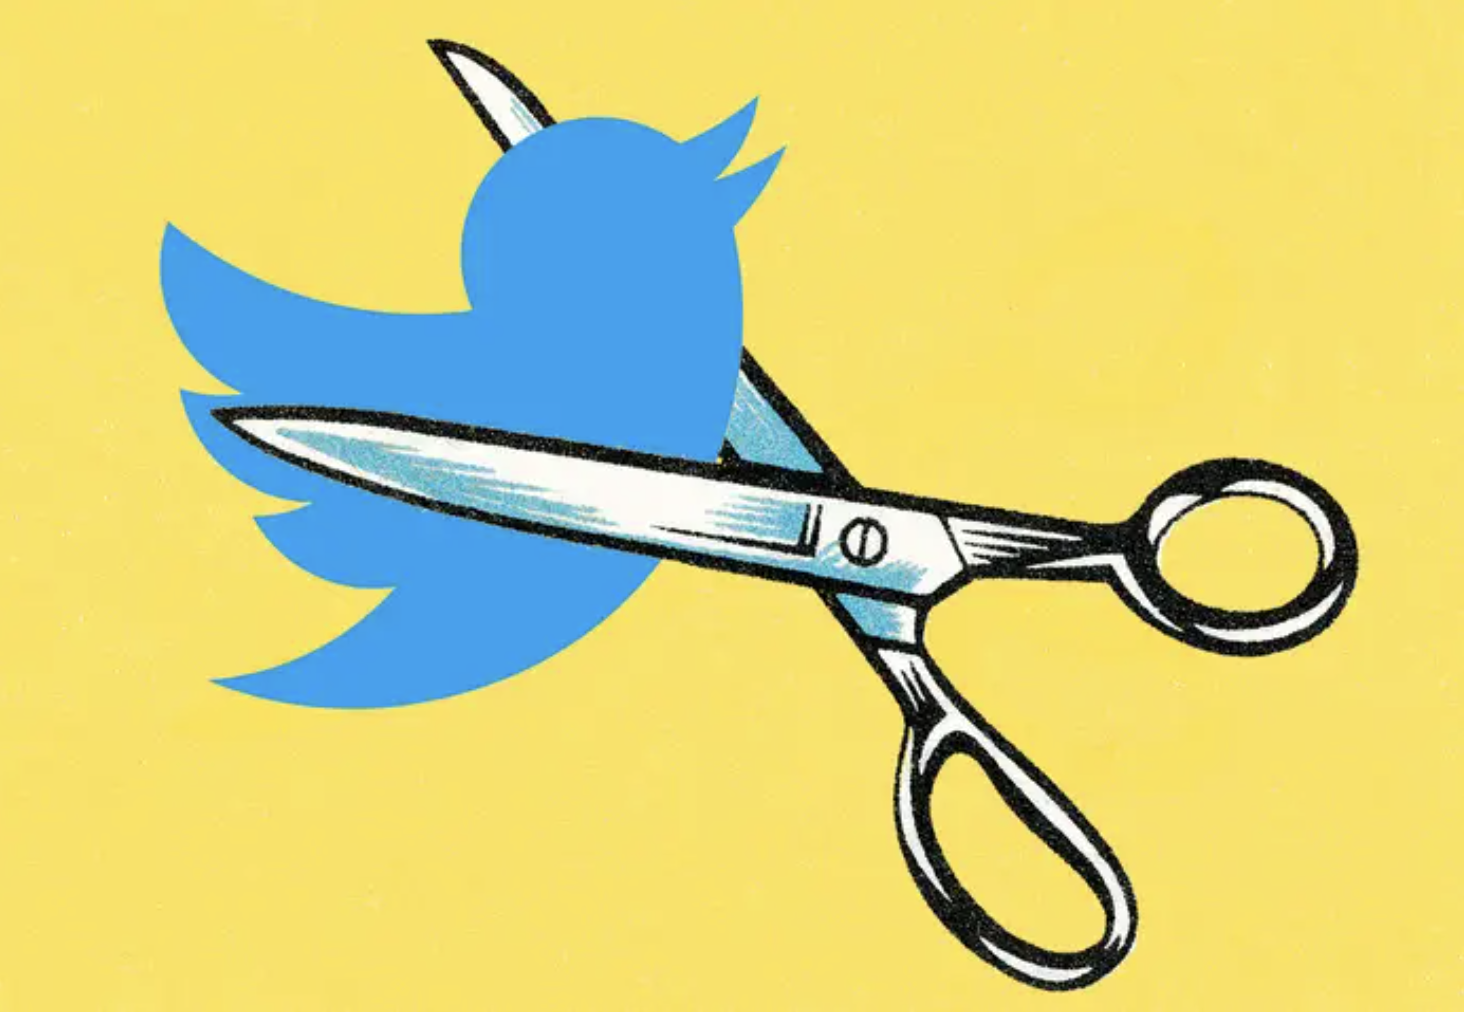 the twitter bird logo being cut with scissors